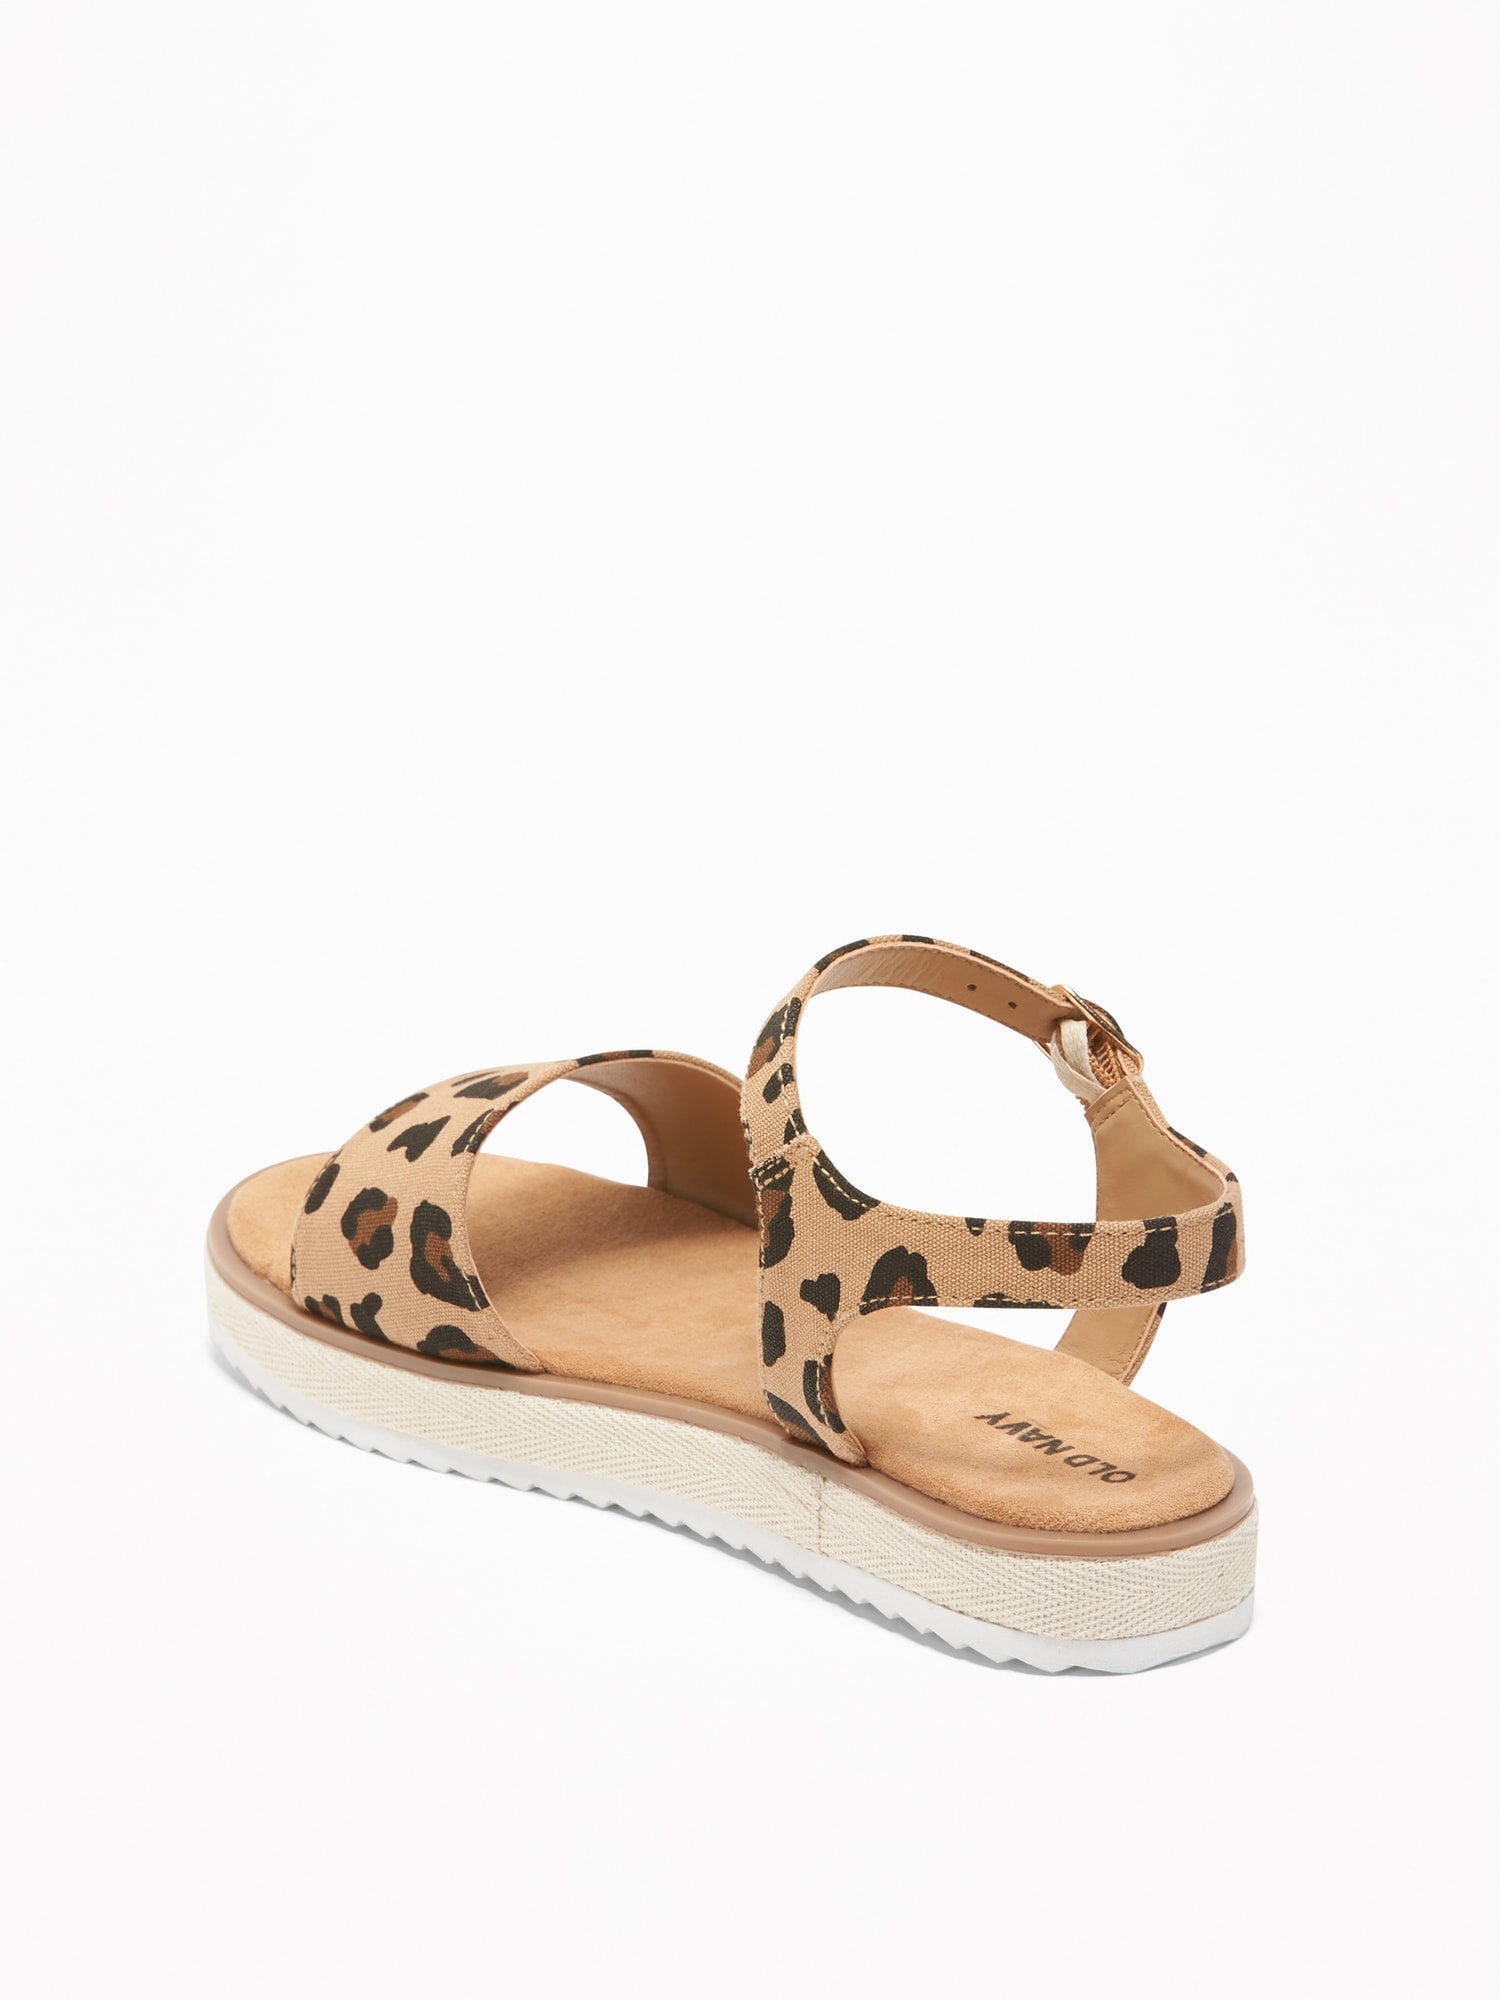 Cheetah-Print Espadrille Sandals for Girls | Old Navy